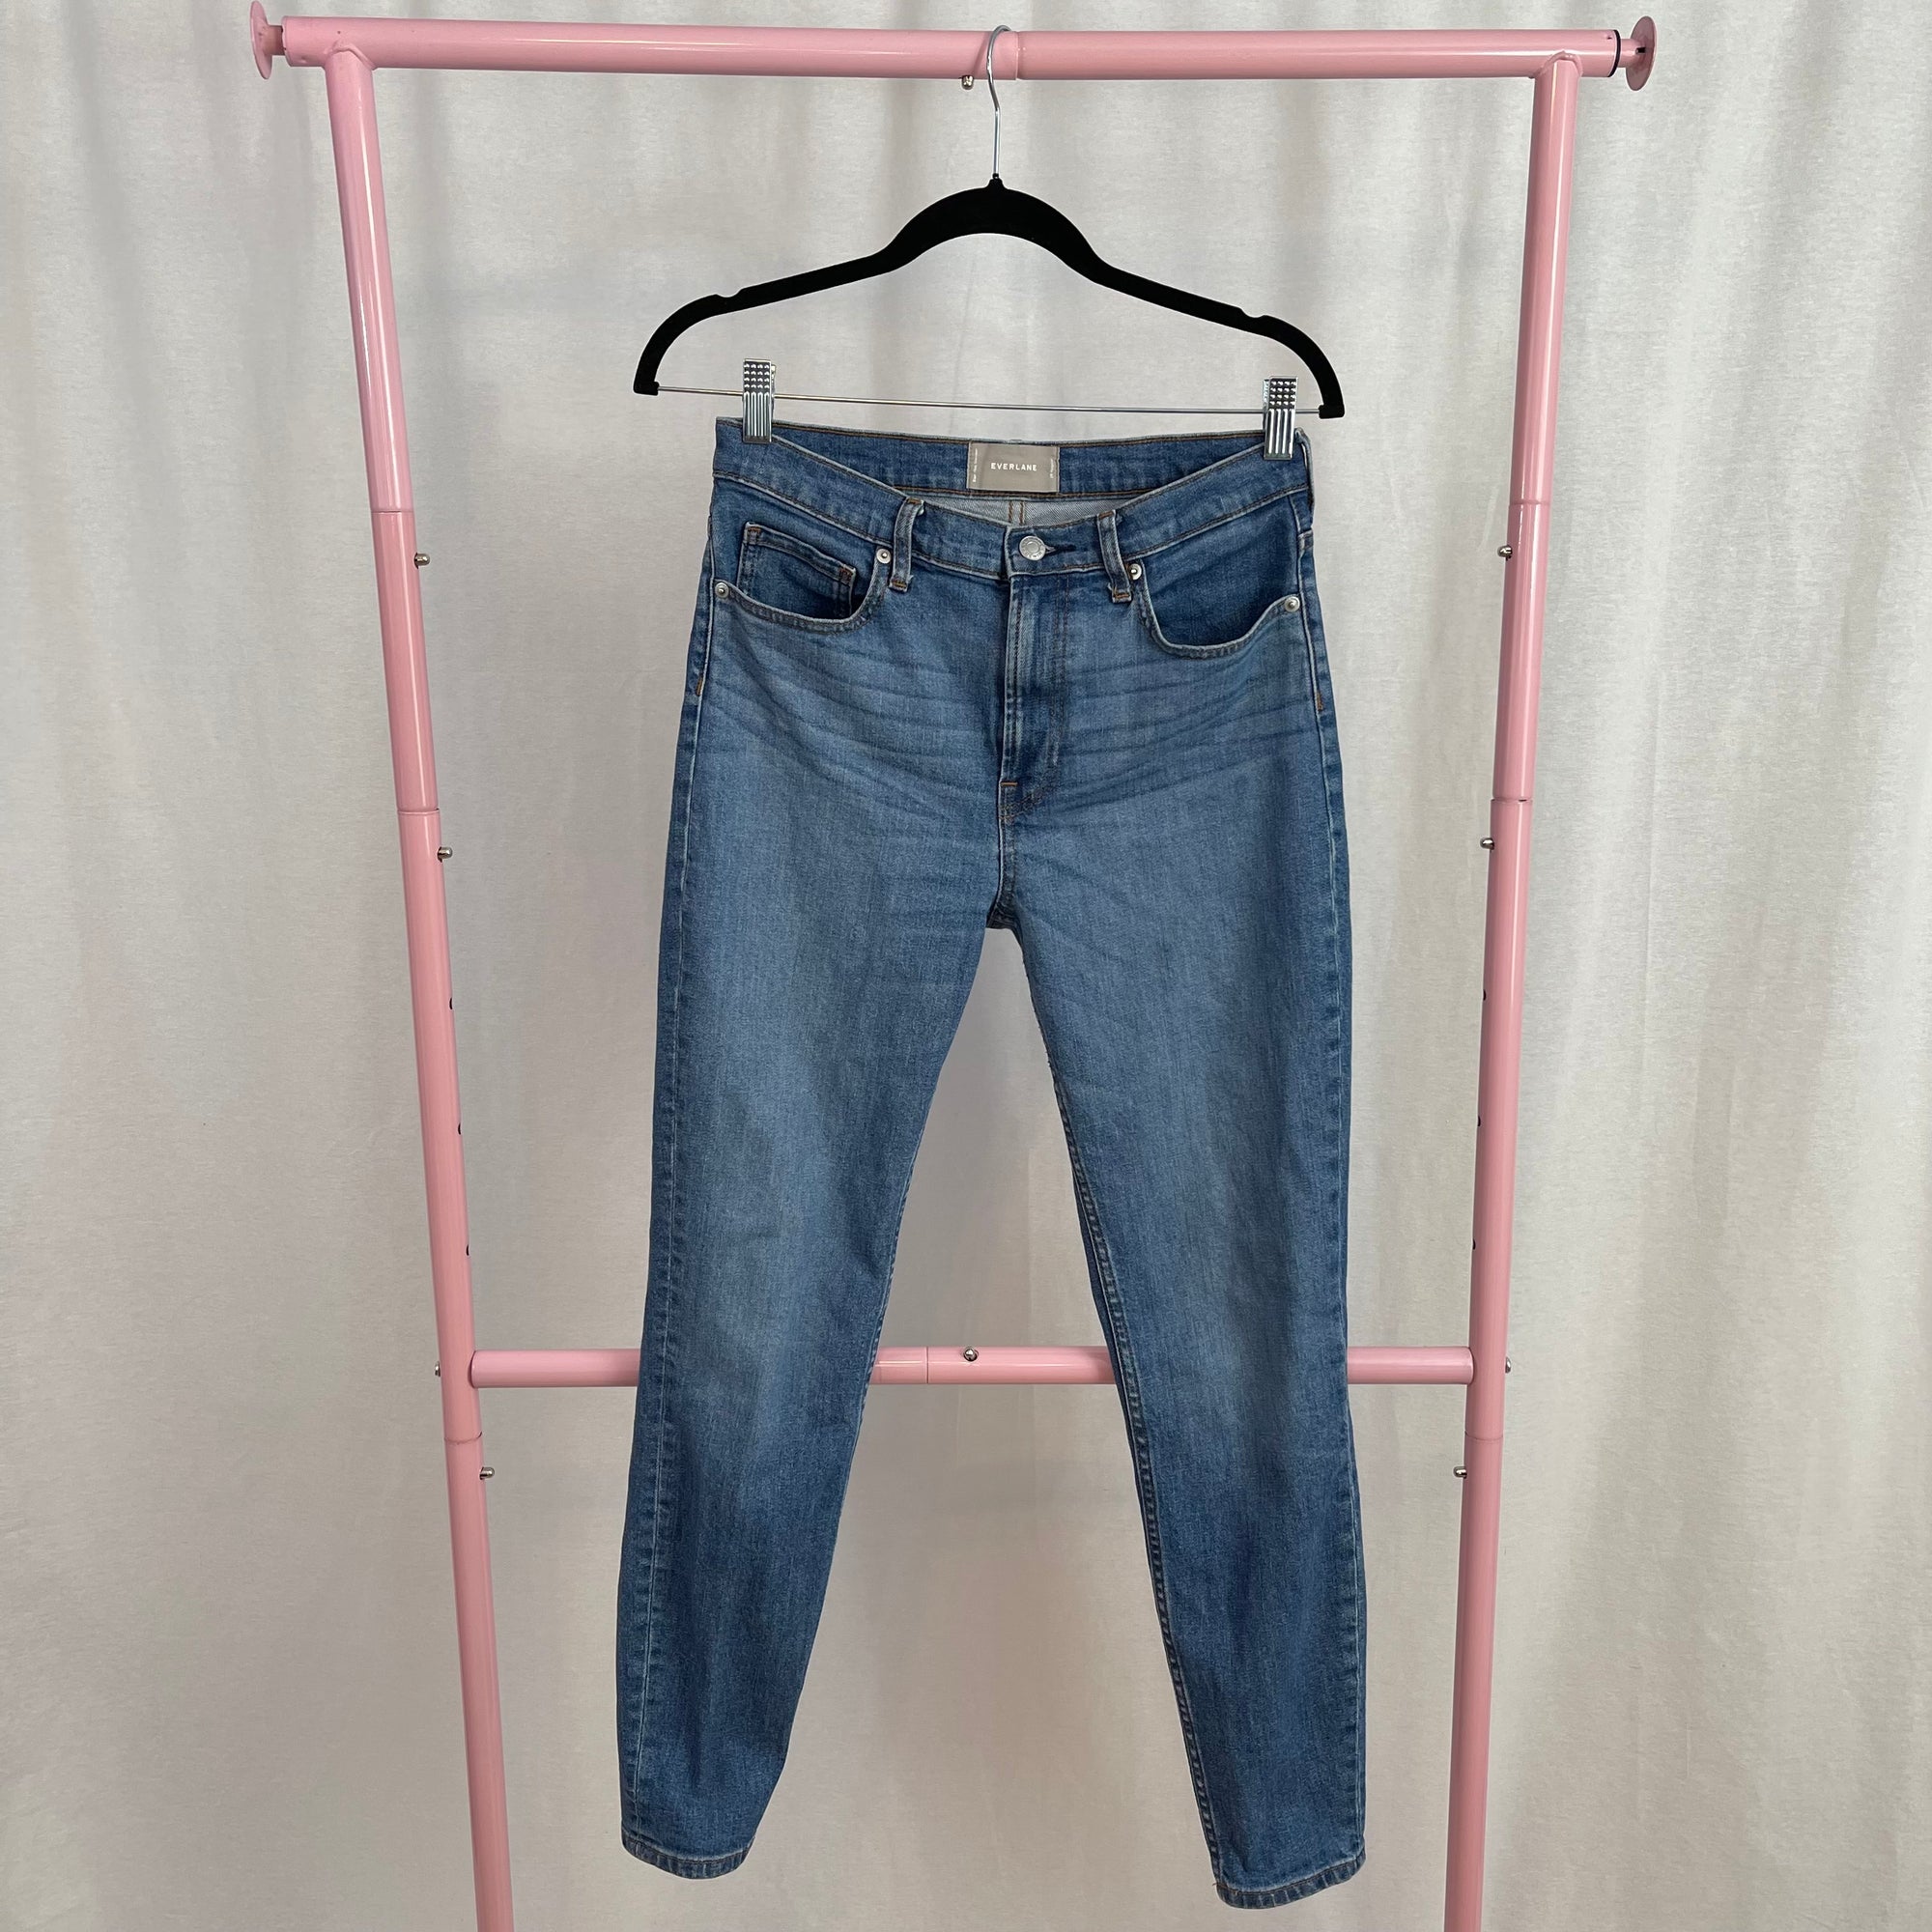 Everlane Medium Wash High Rise Skinny Jeans size 29